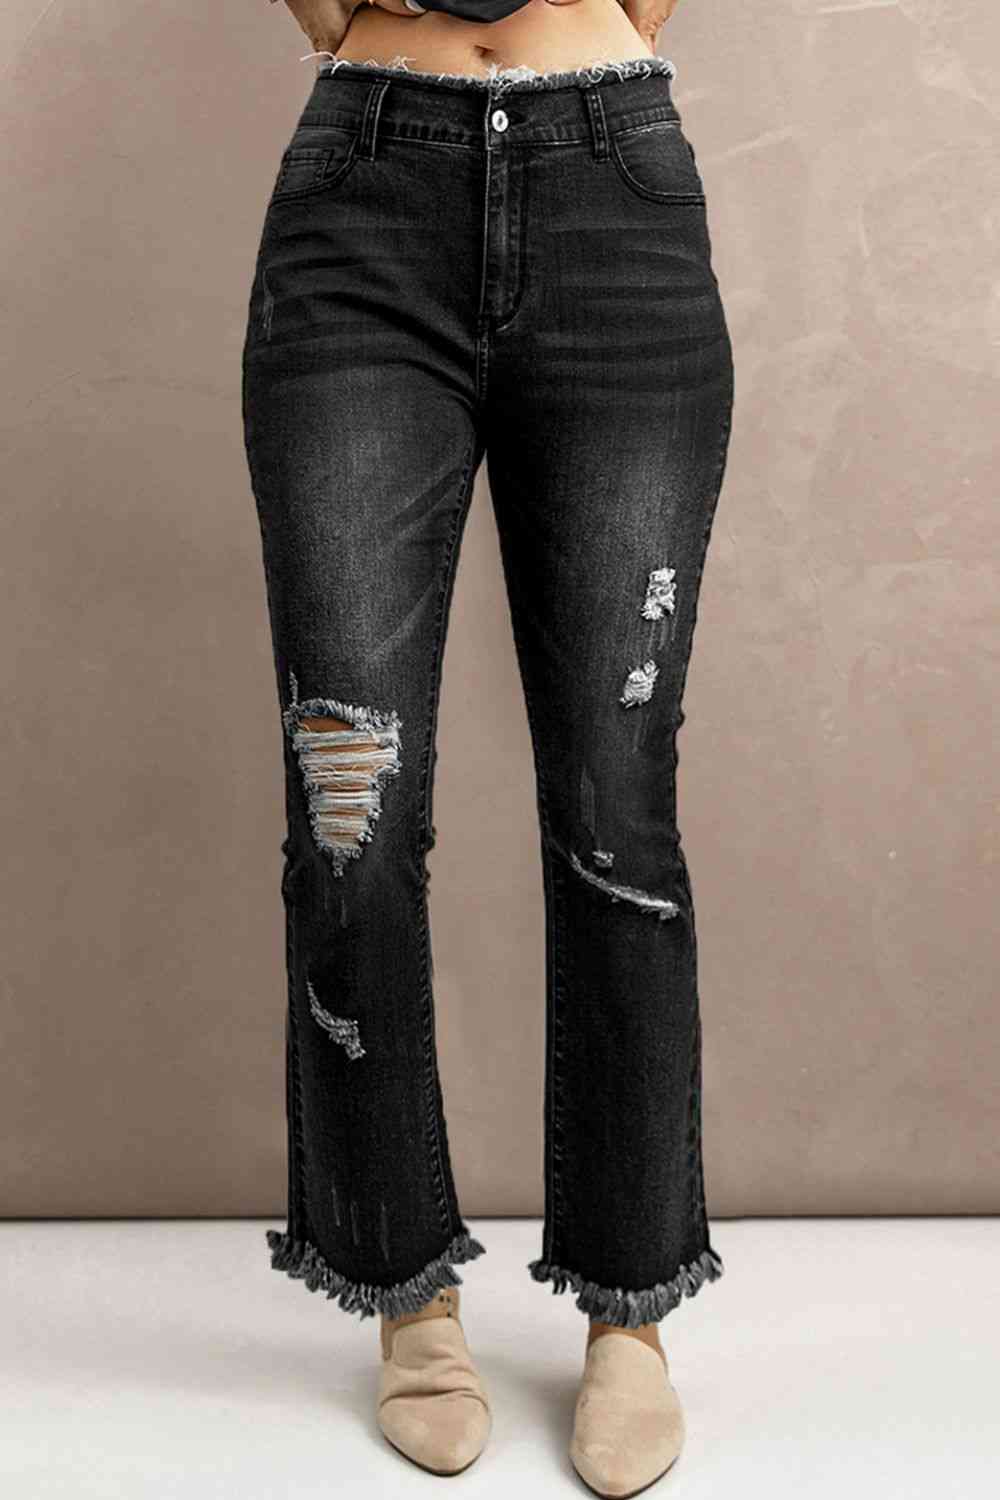 Baeful High Waist Distressed Raw Hem Jeans Black